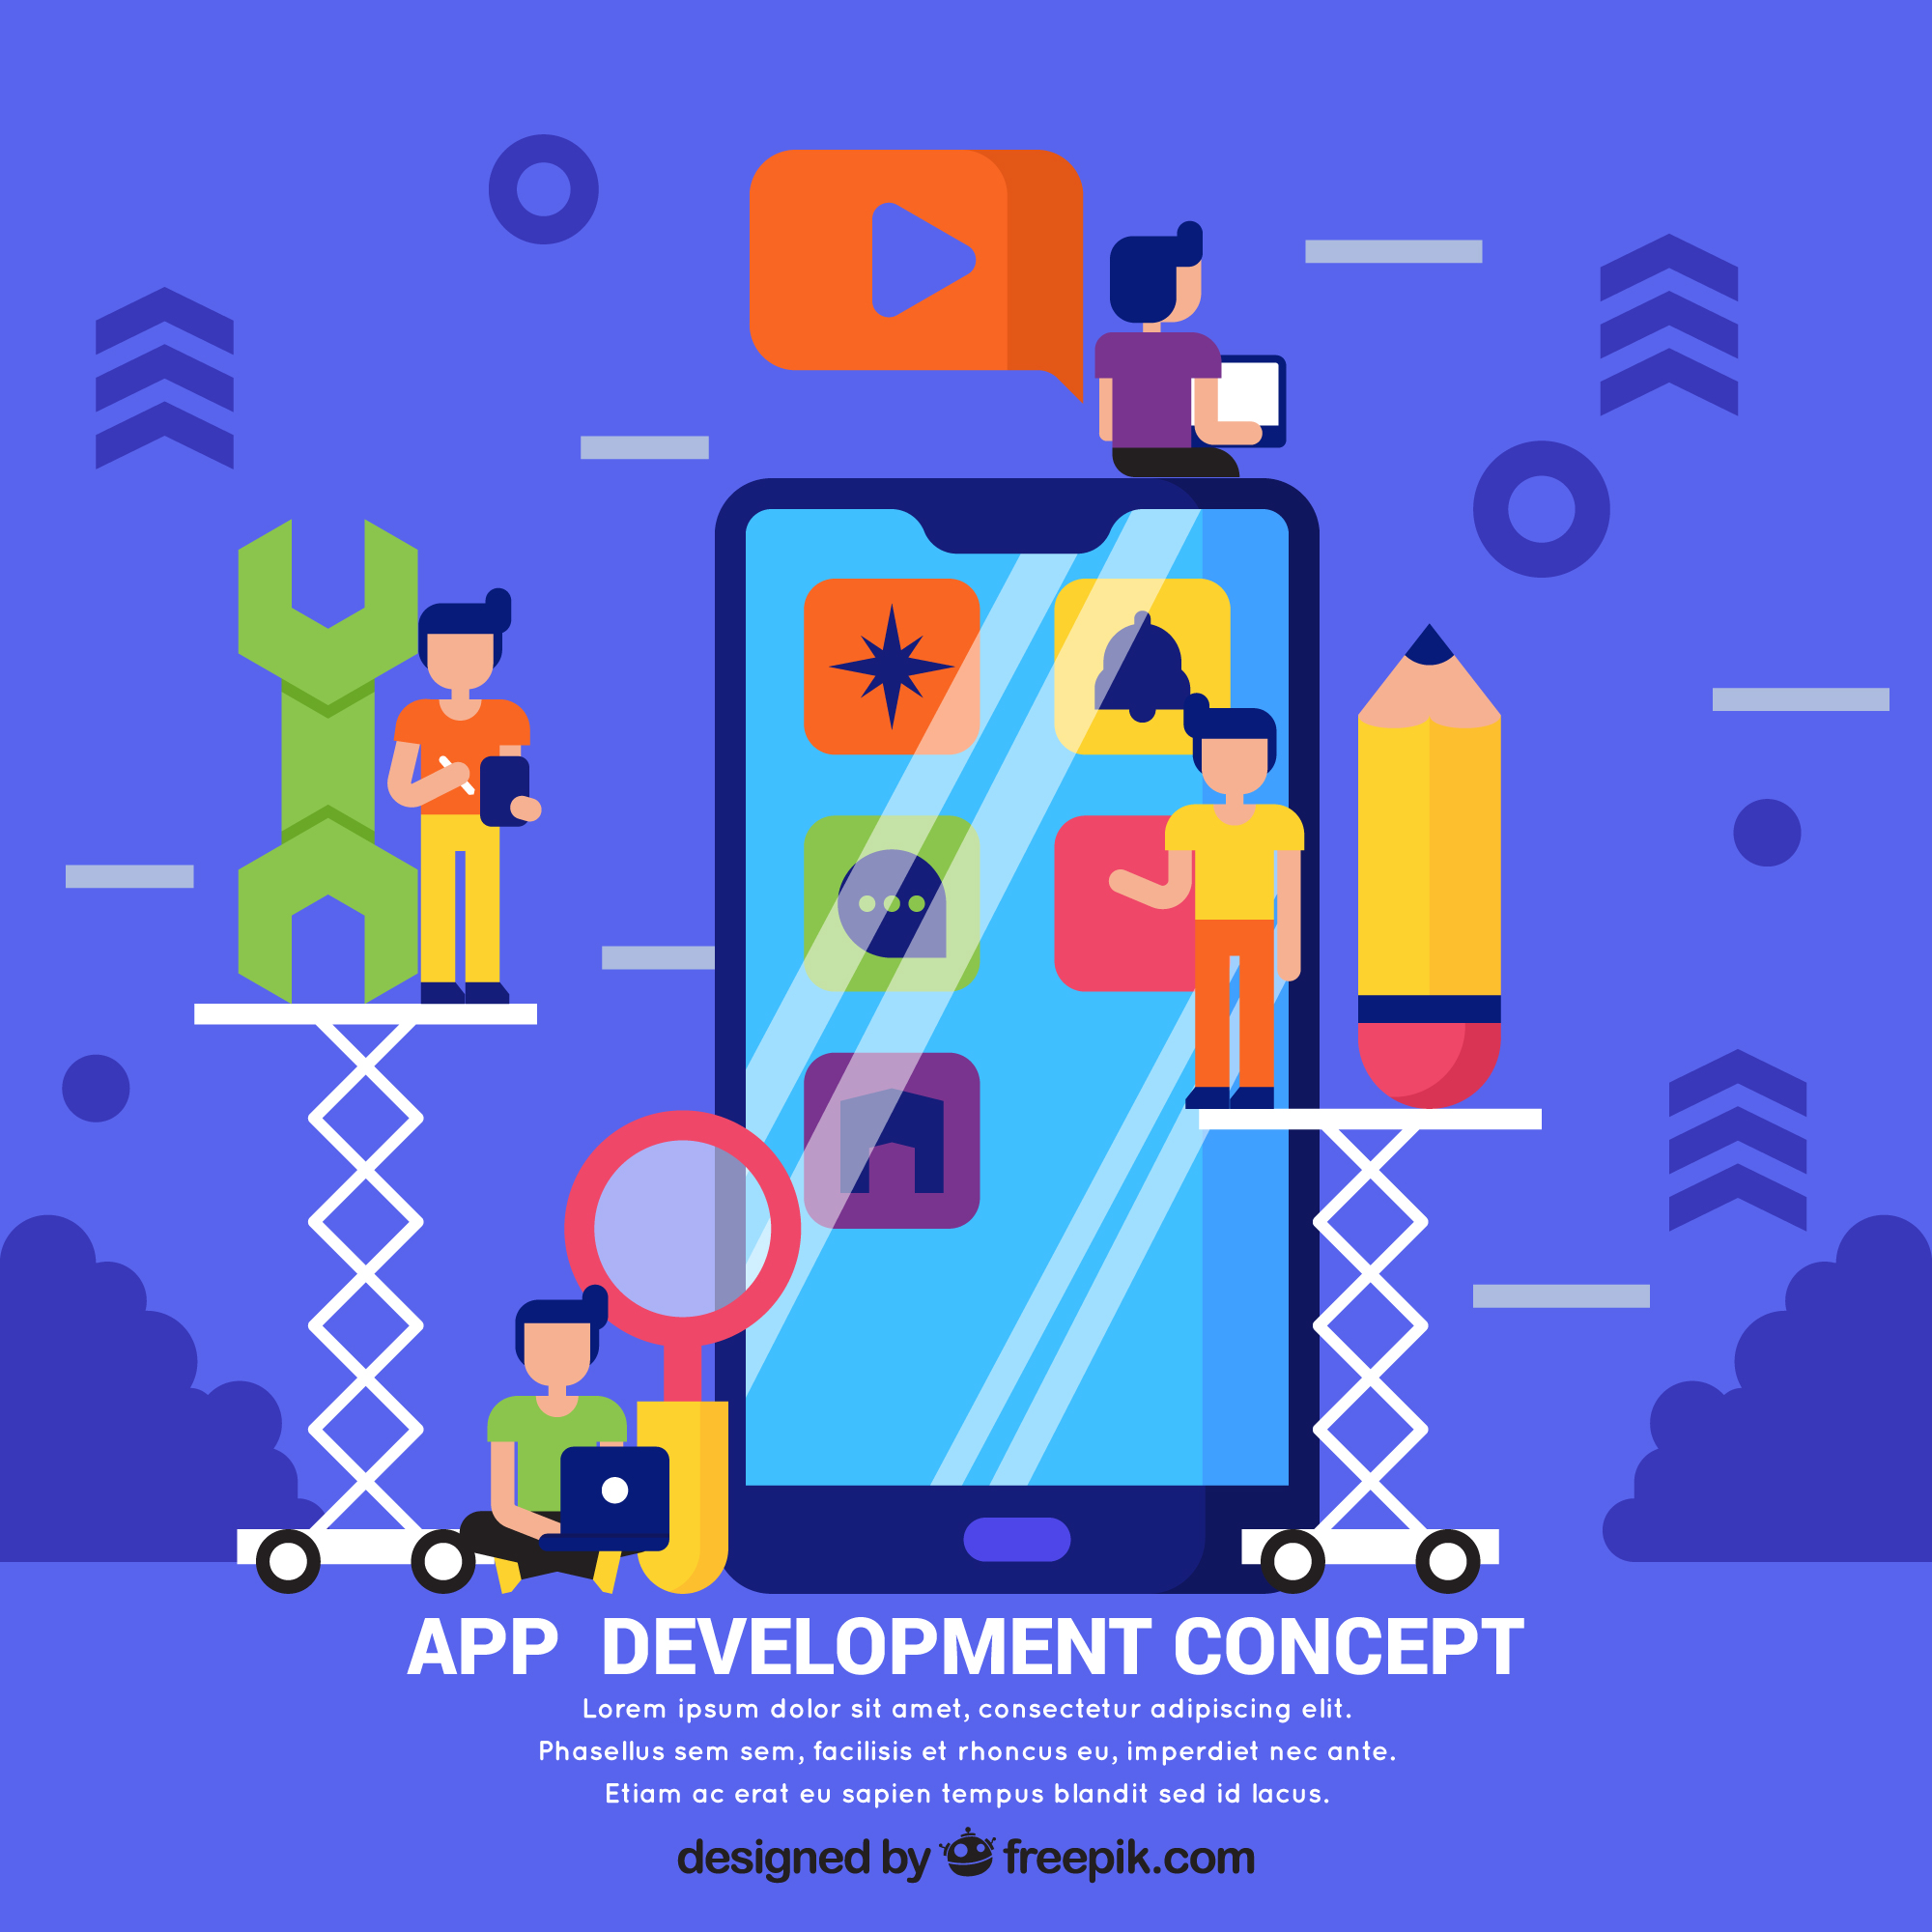 Android App Development Company USA